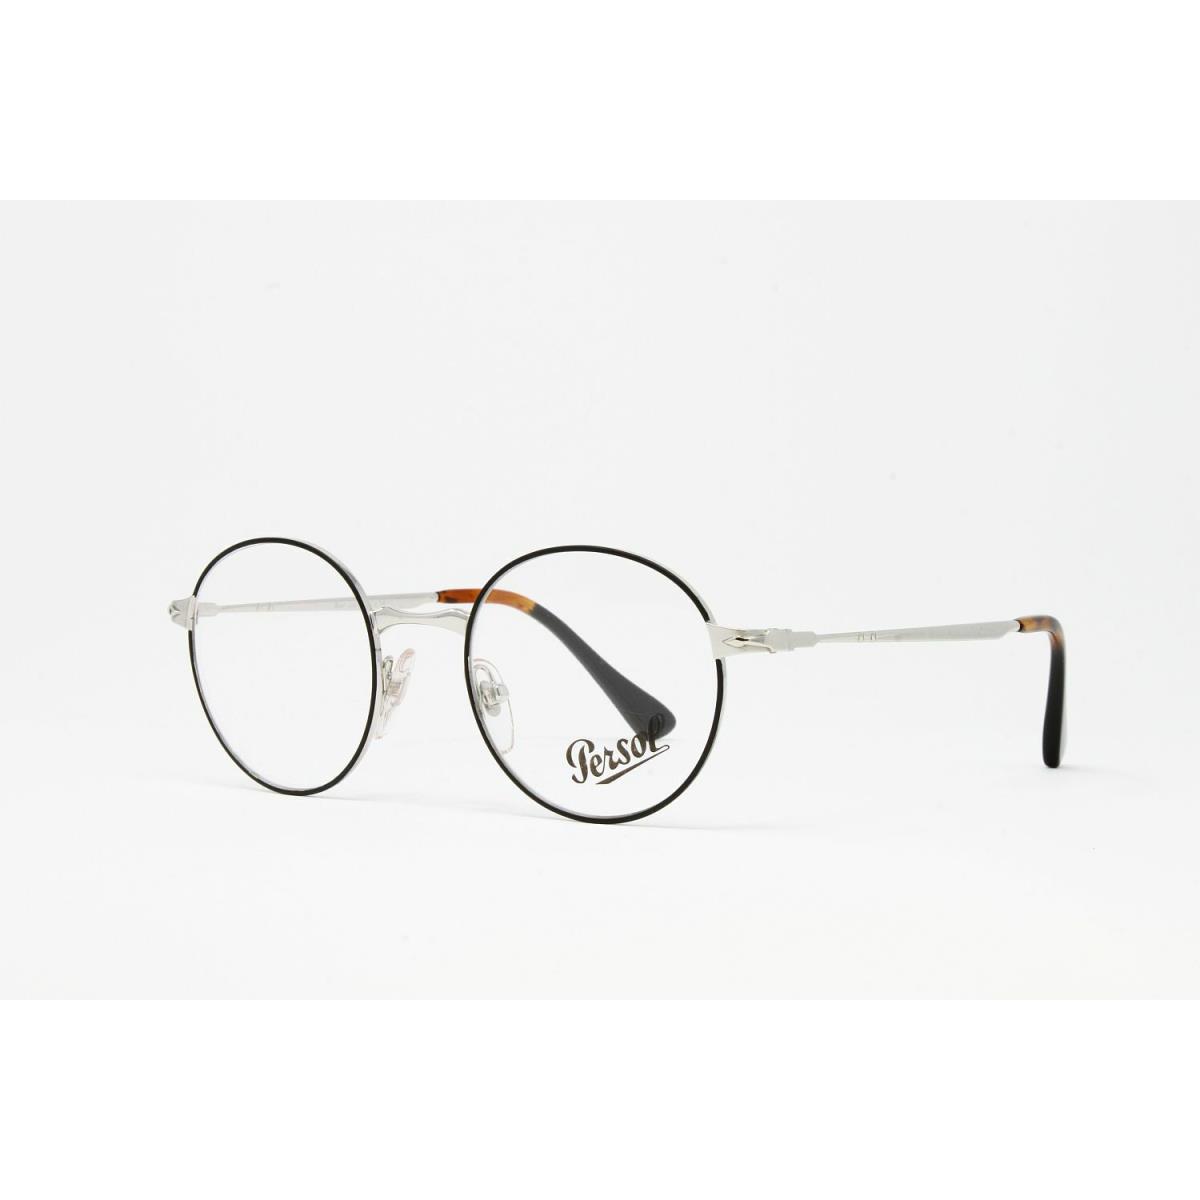 Persol eyeglasses  - Silver Frame 1